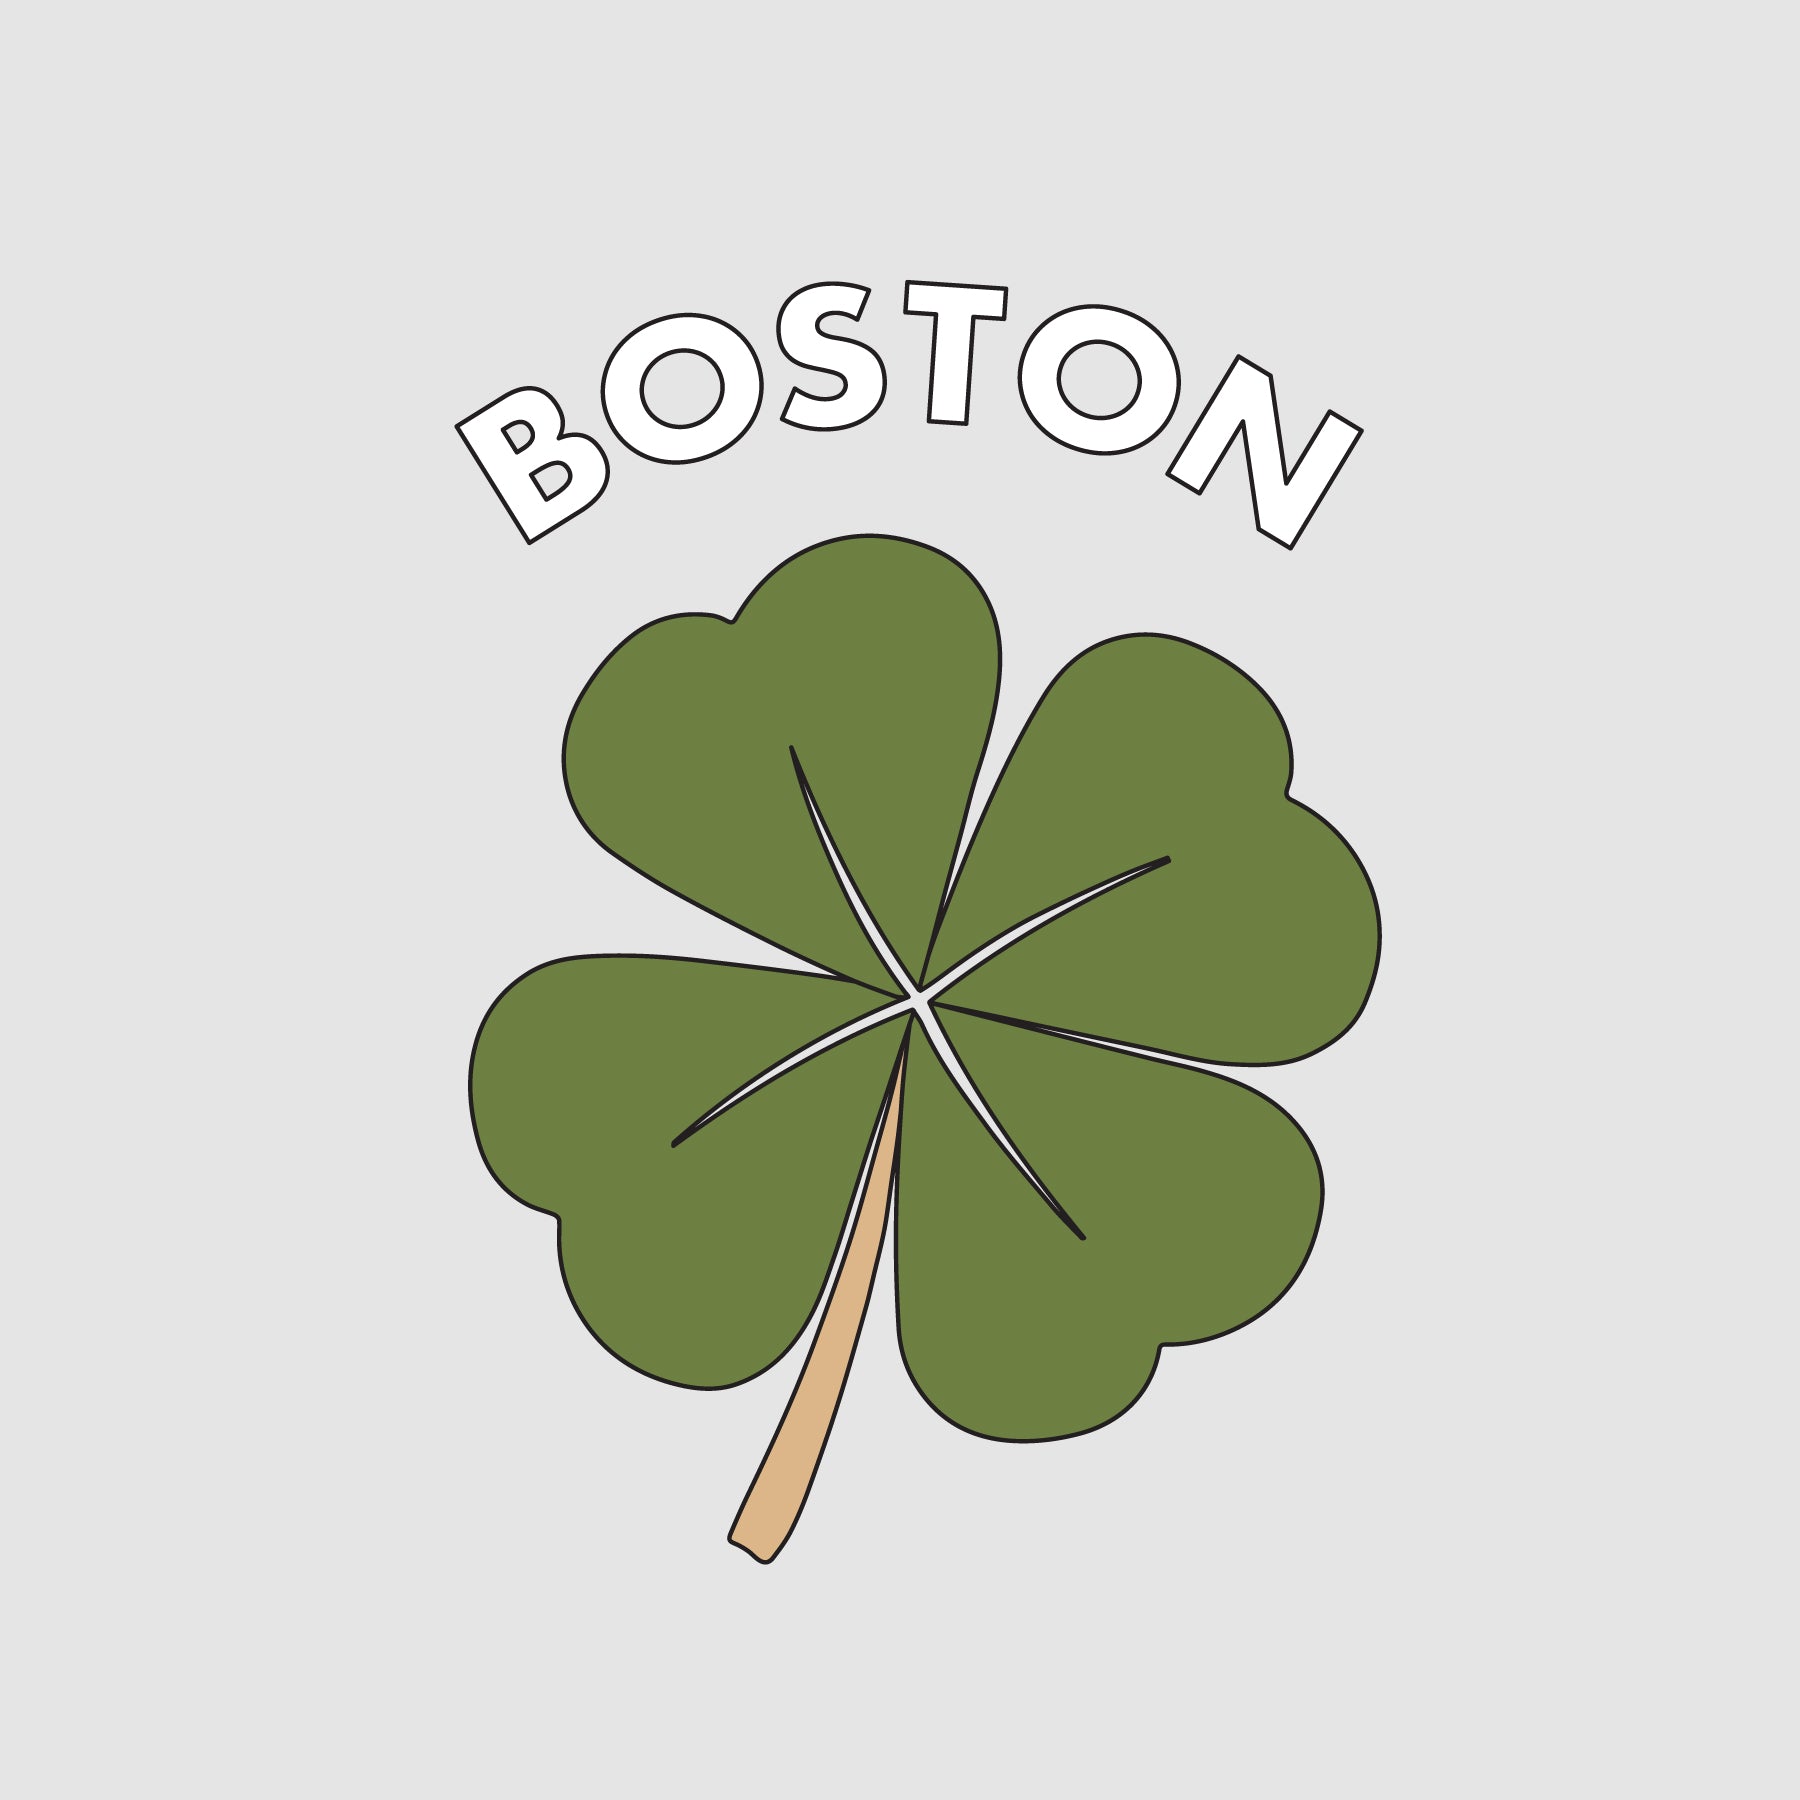 BOSTON - AUGUST 19, 2023